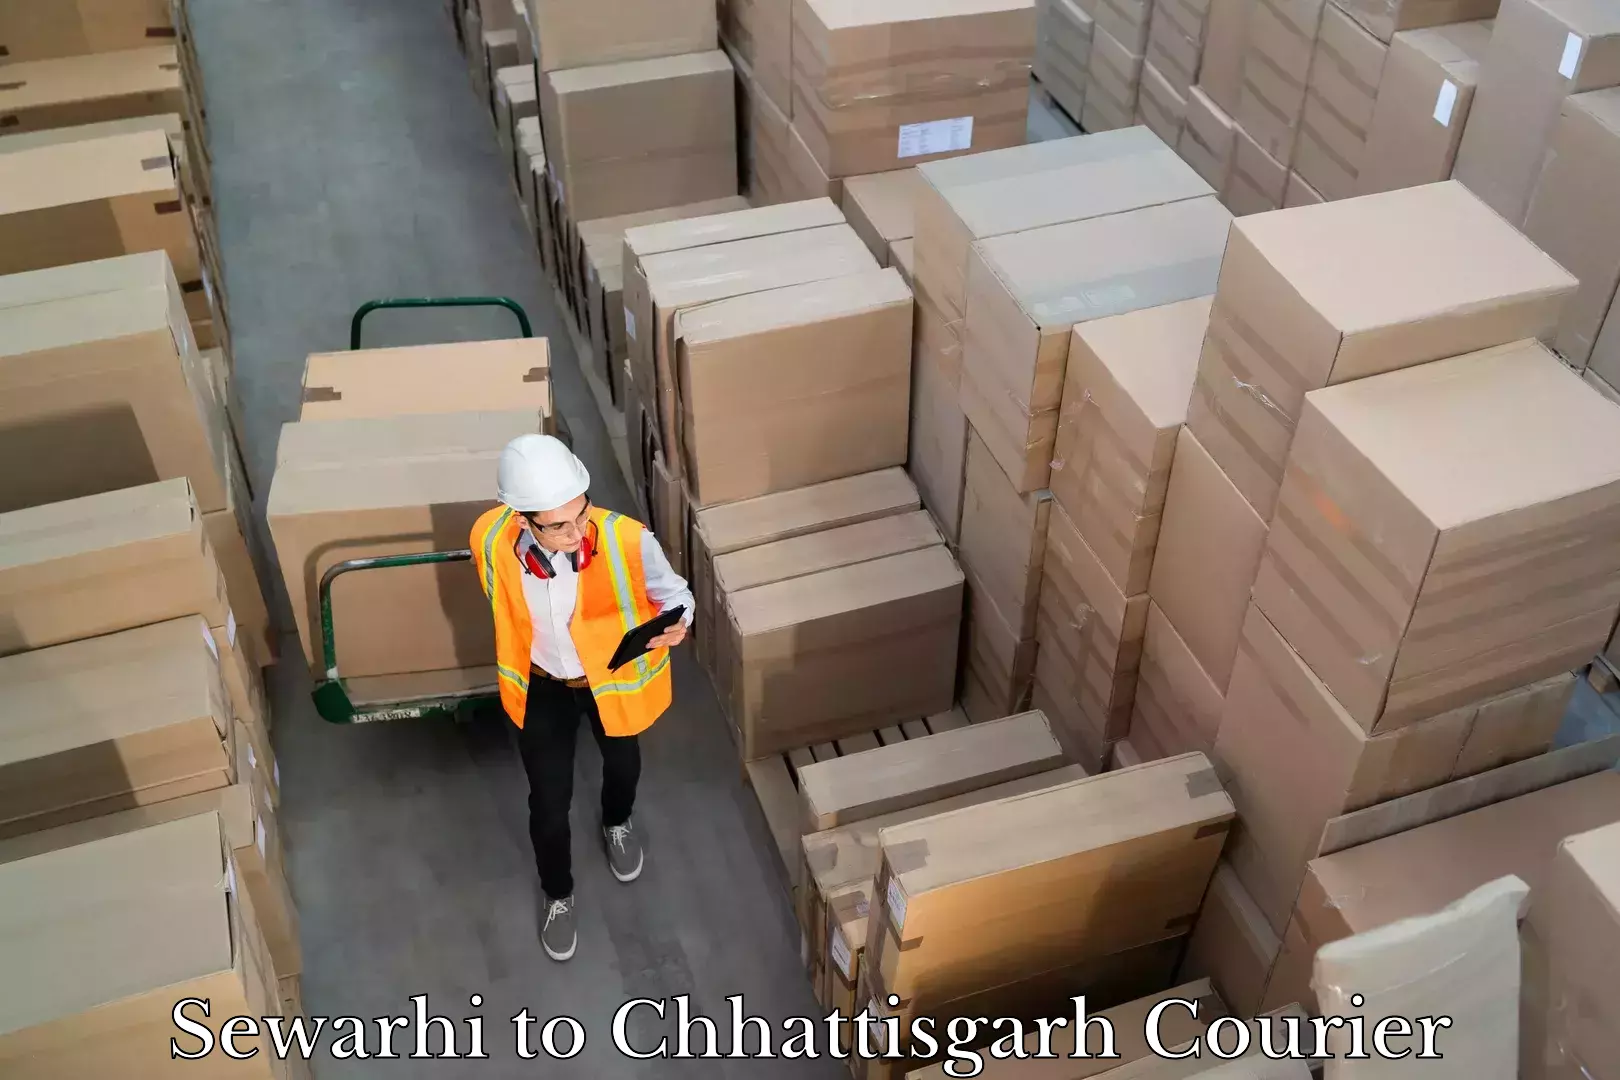 Global courier networks Sewarhi to Chhattisgarh